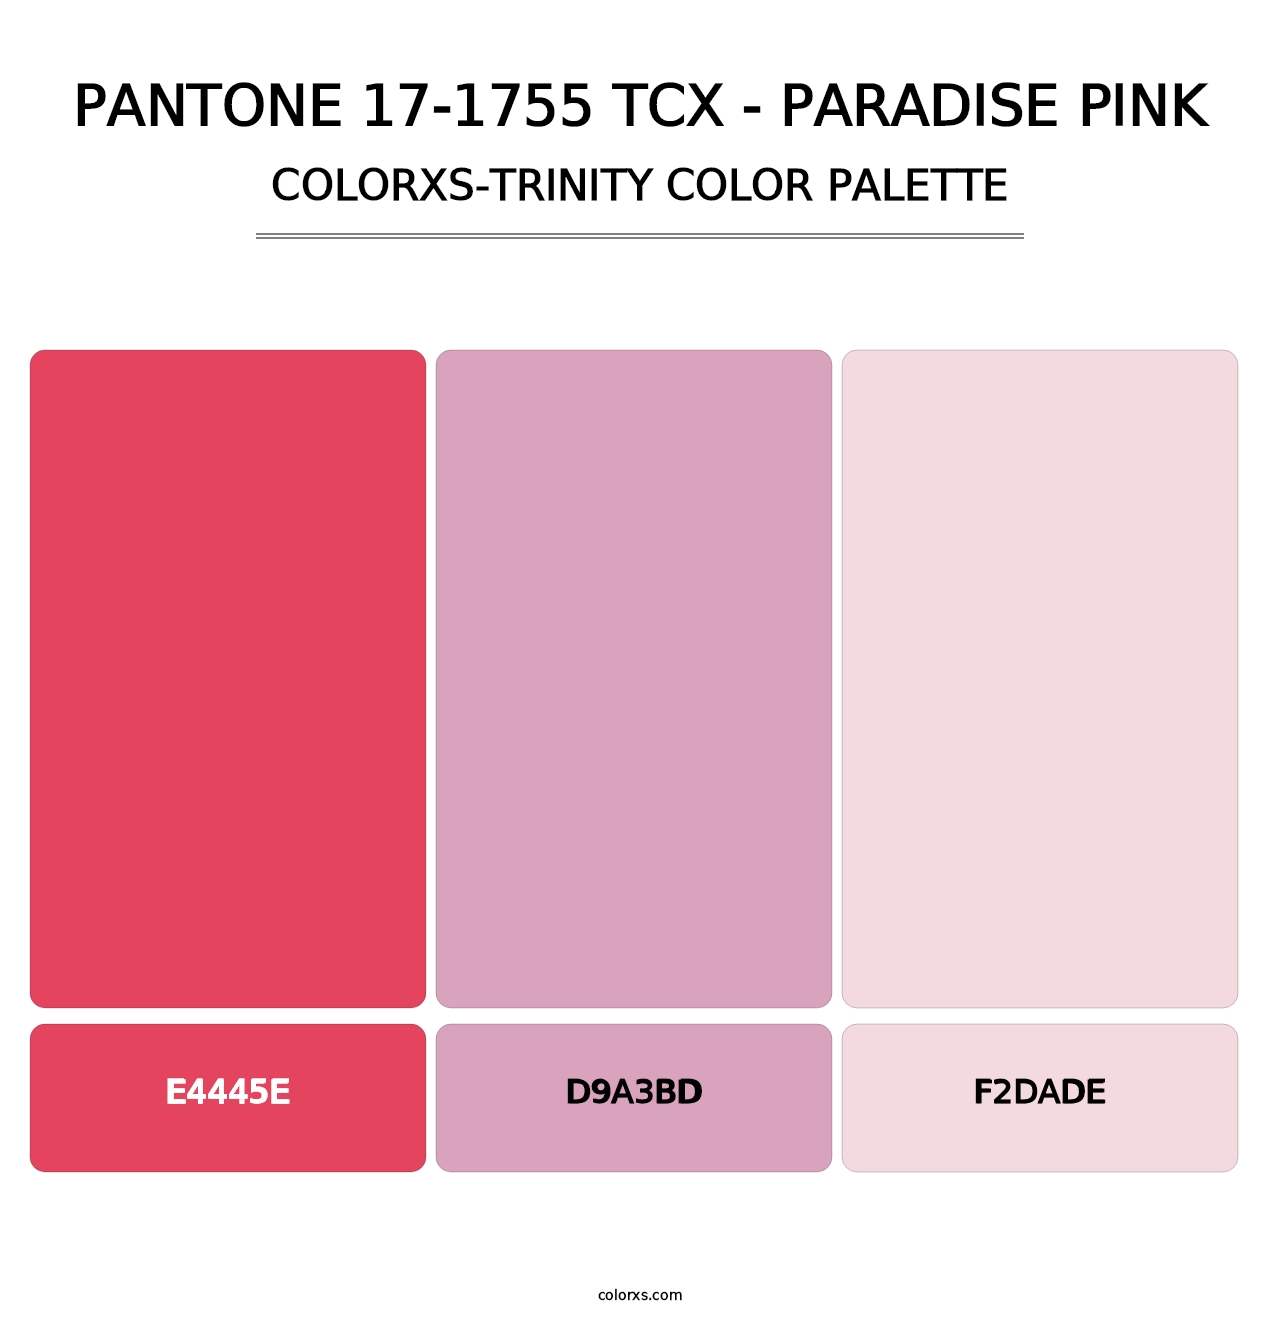 PANTONE 17-1755 TCX - Paradise Pink - Colorxs Trinity Palette